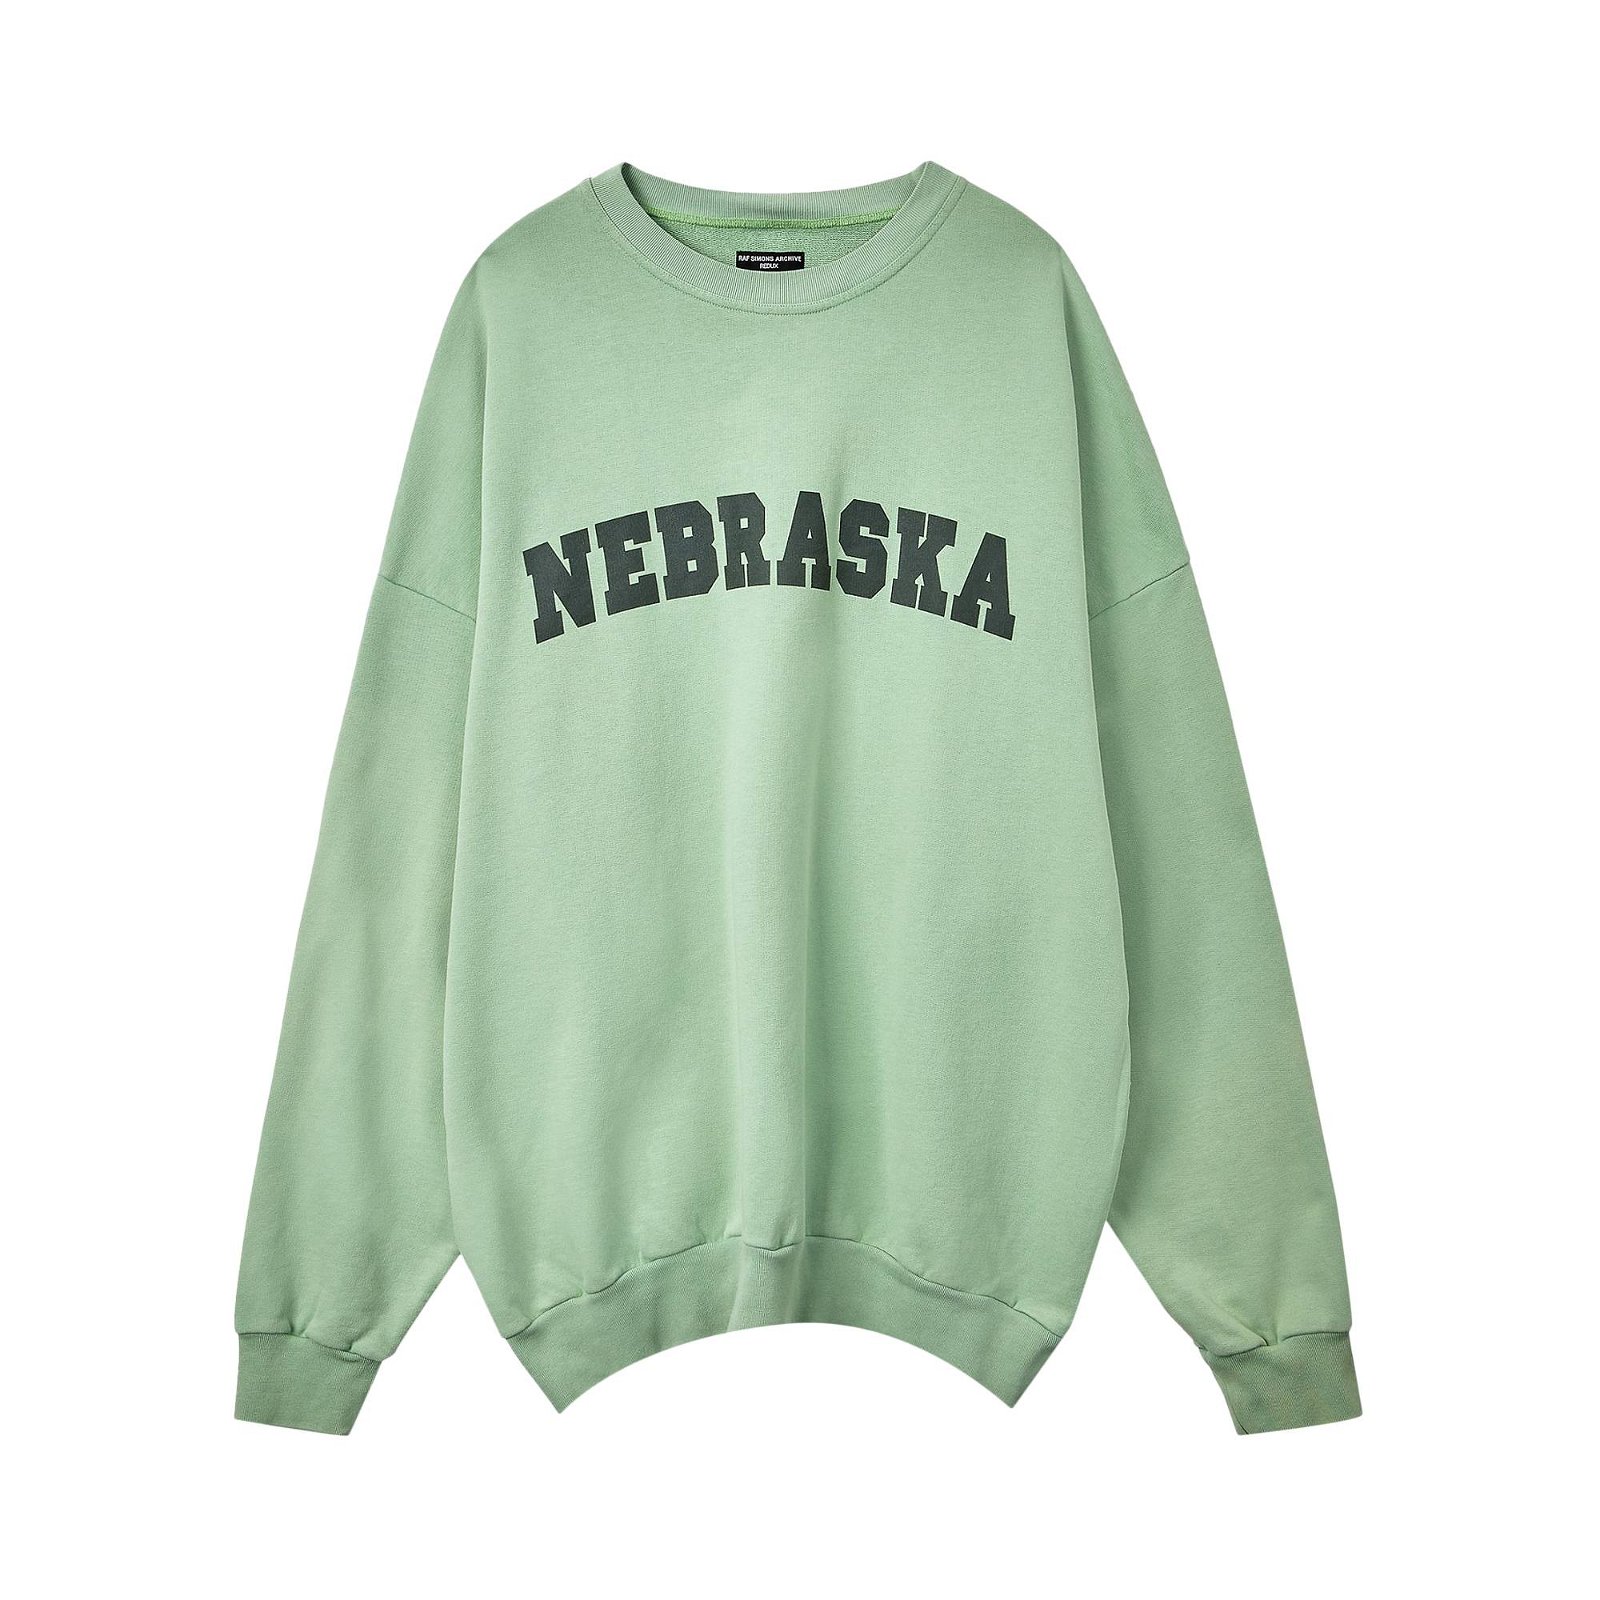 Sweater RAF SIMONS Redux Sweater With Nebraska Print A01 130 19004